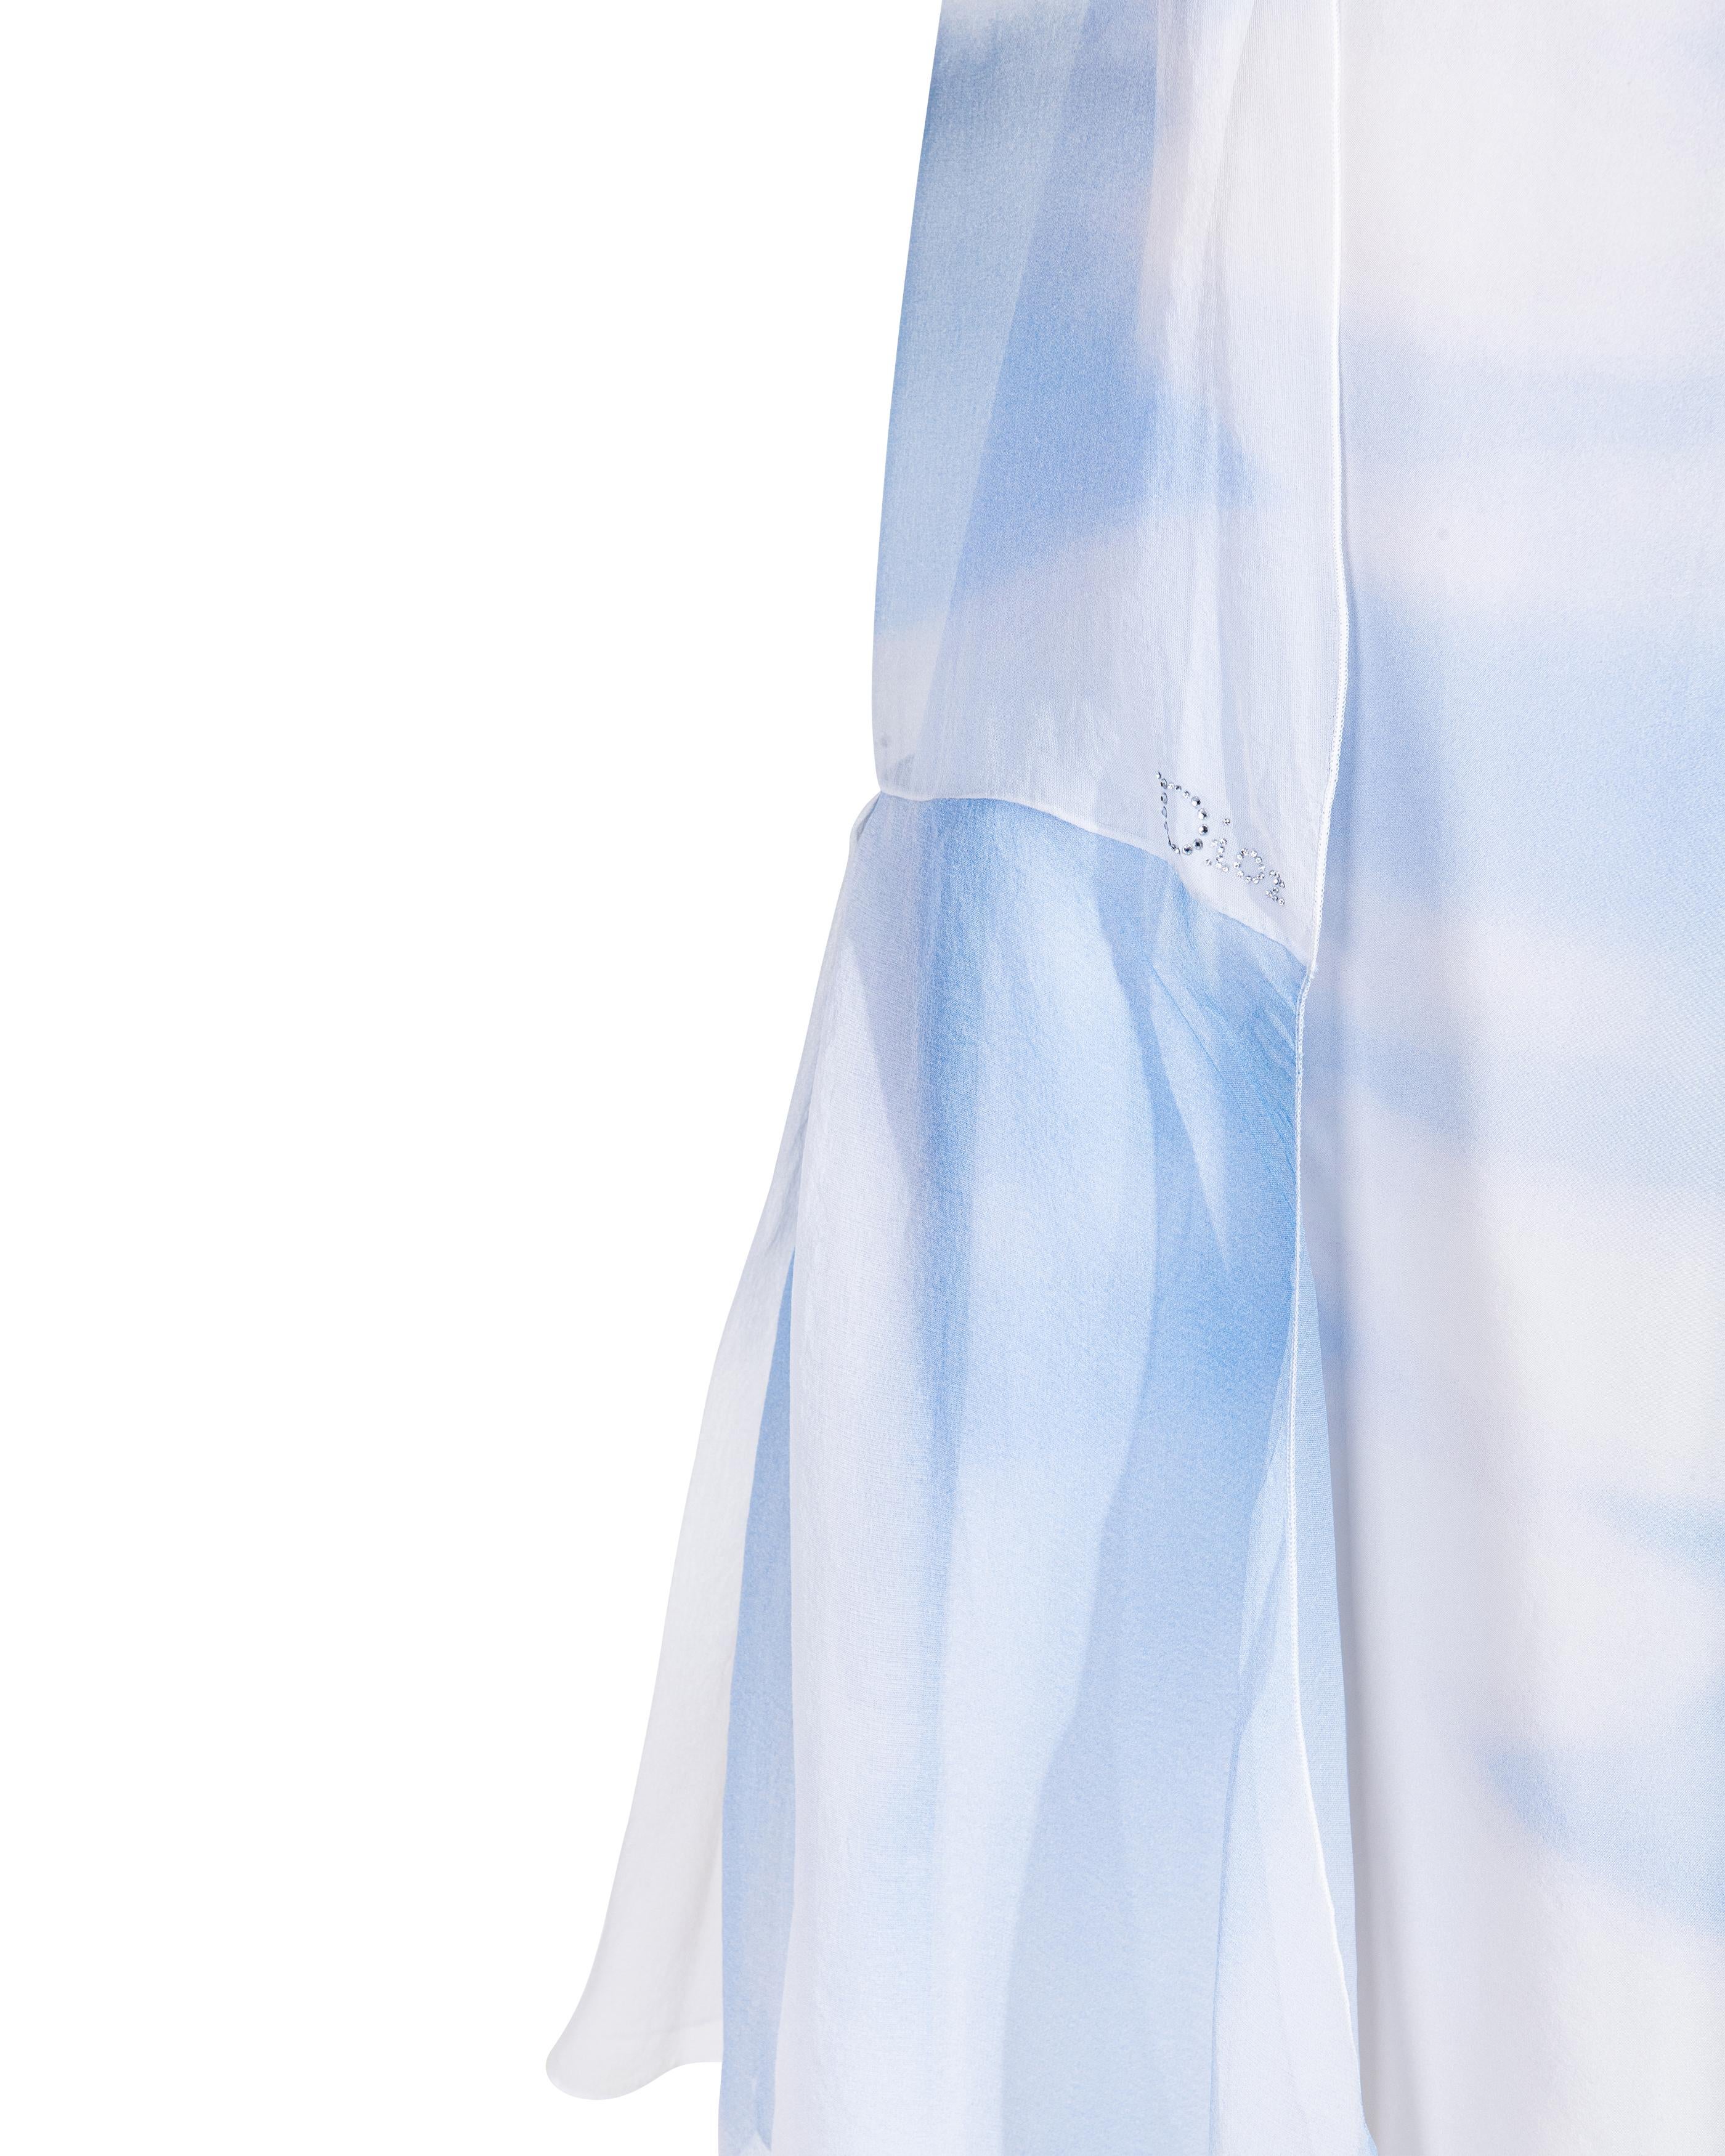 c. 2007 Christian Dior by John Galliano Cloud Print Silk Dress and Stole 4